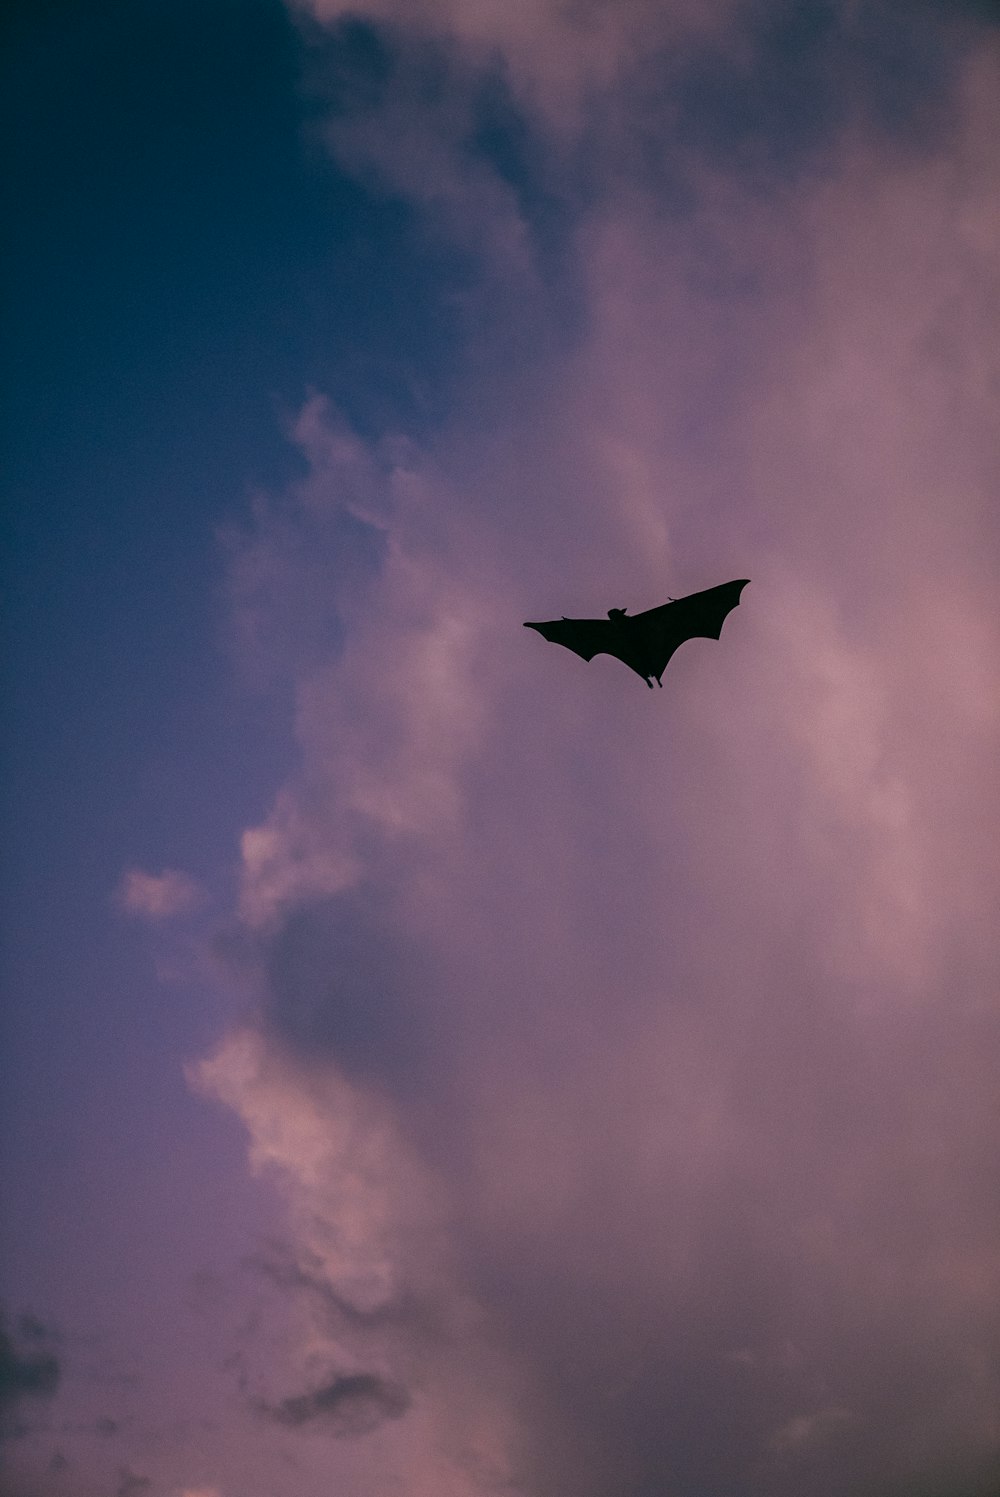 a large bat flying through a cloudy sky